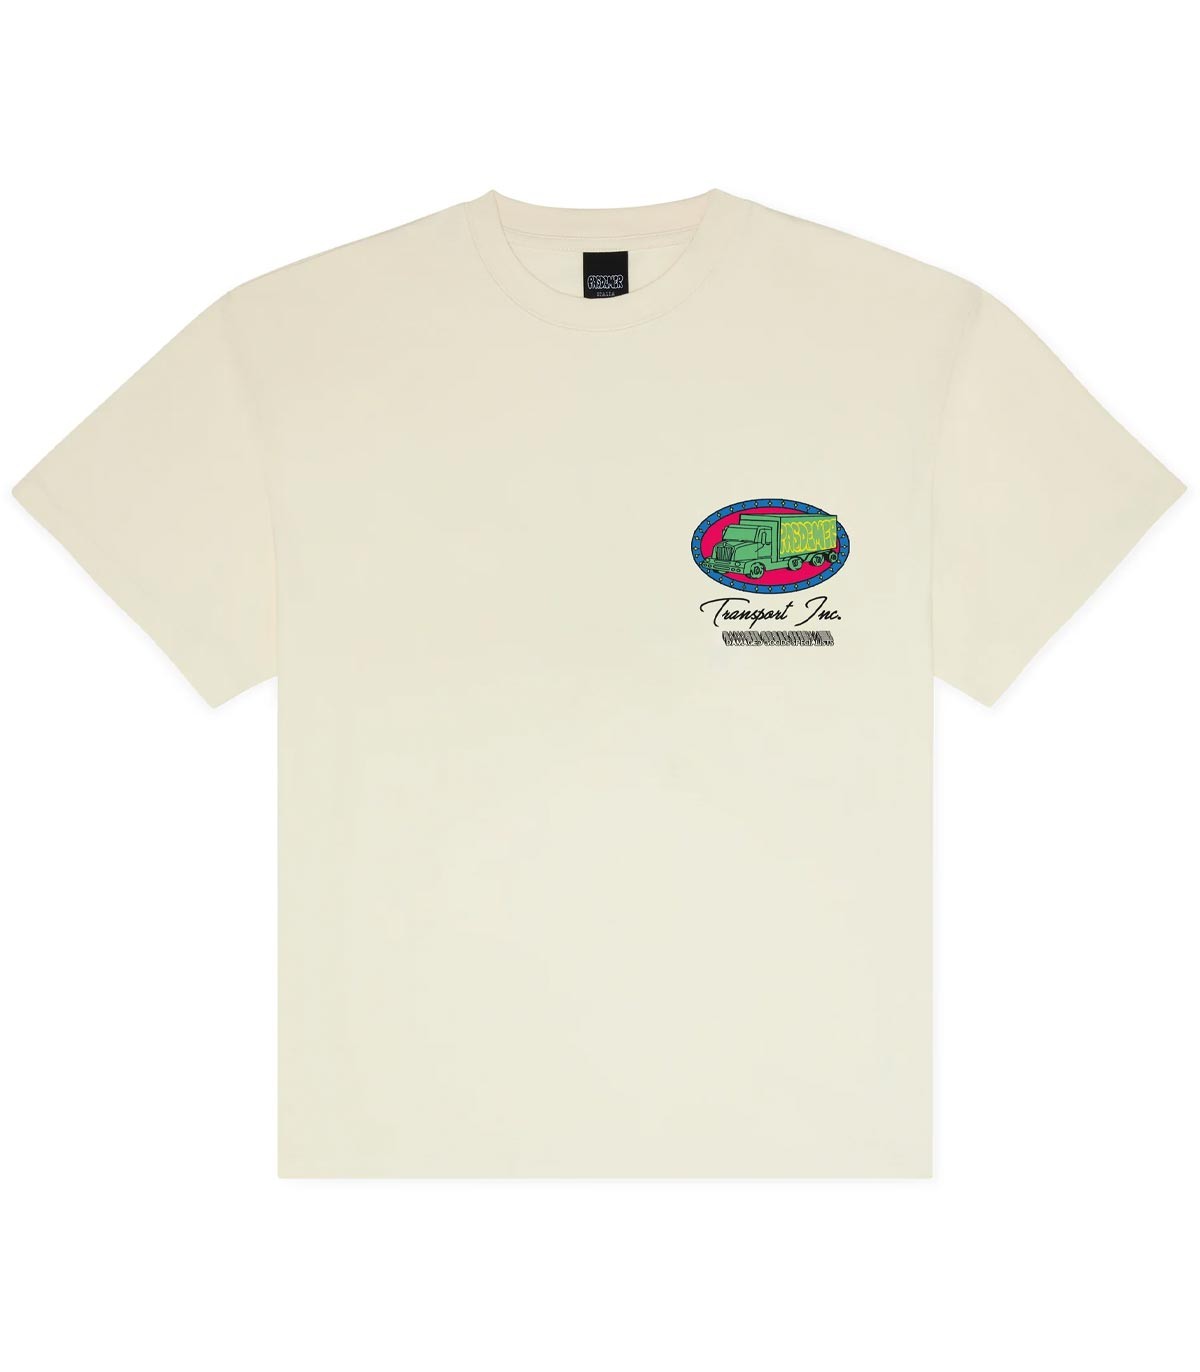 PASDEMER - Camiseta Transport - Beige